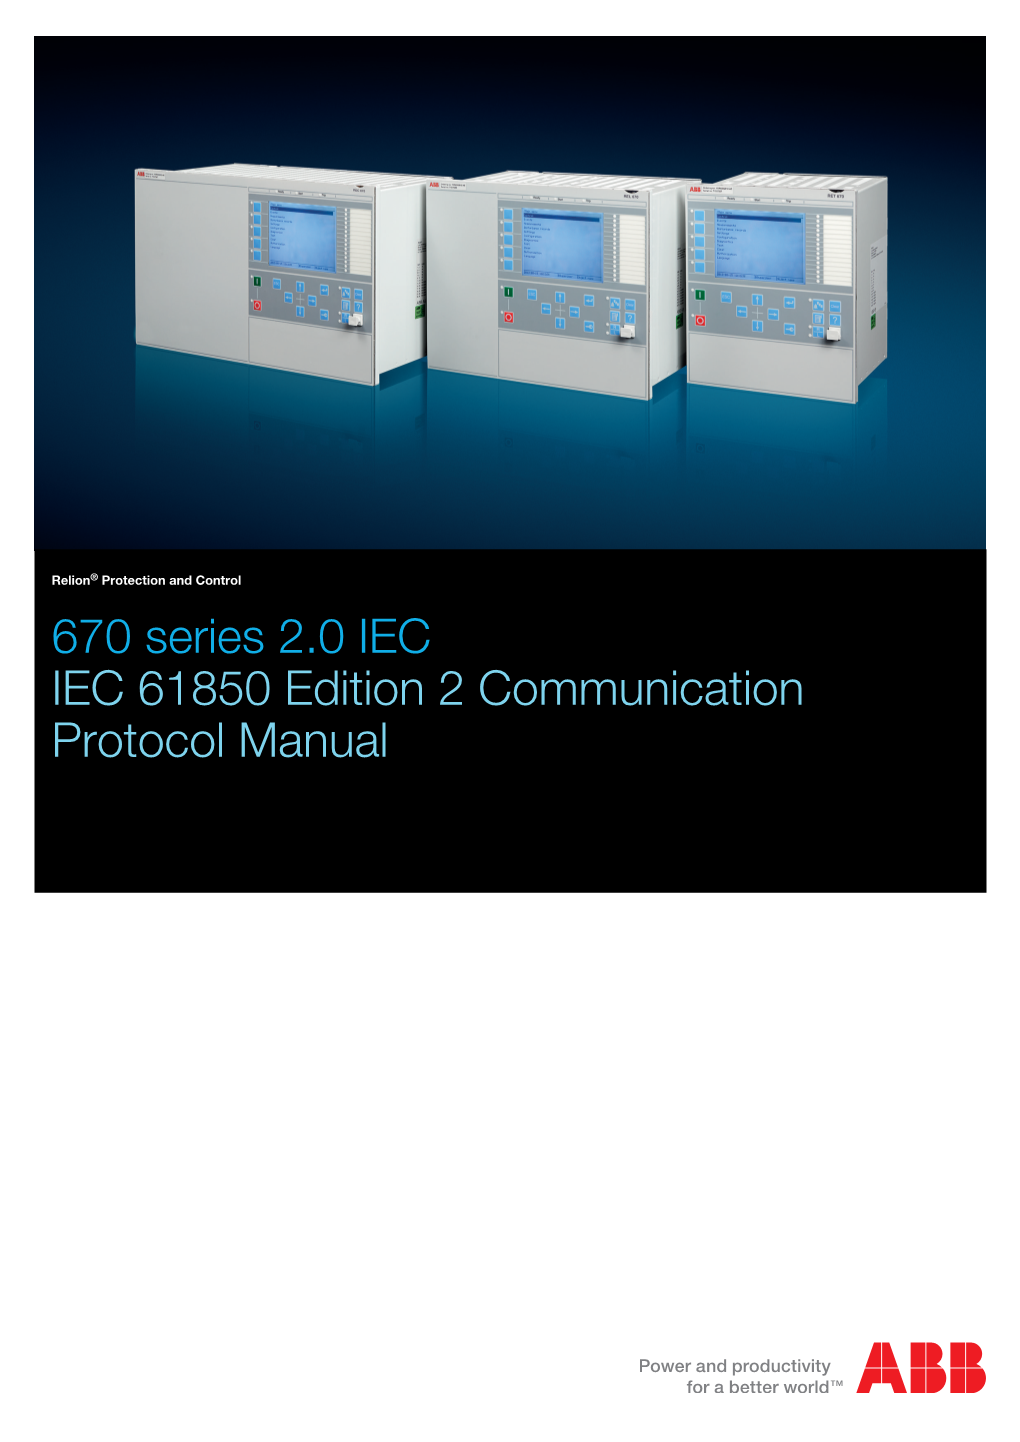 IEC 61850 Edition 2 Communication Protocol Manual